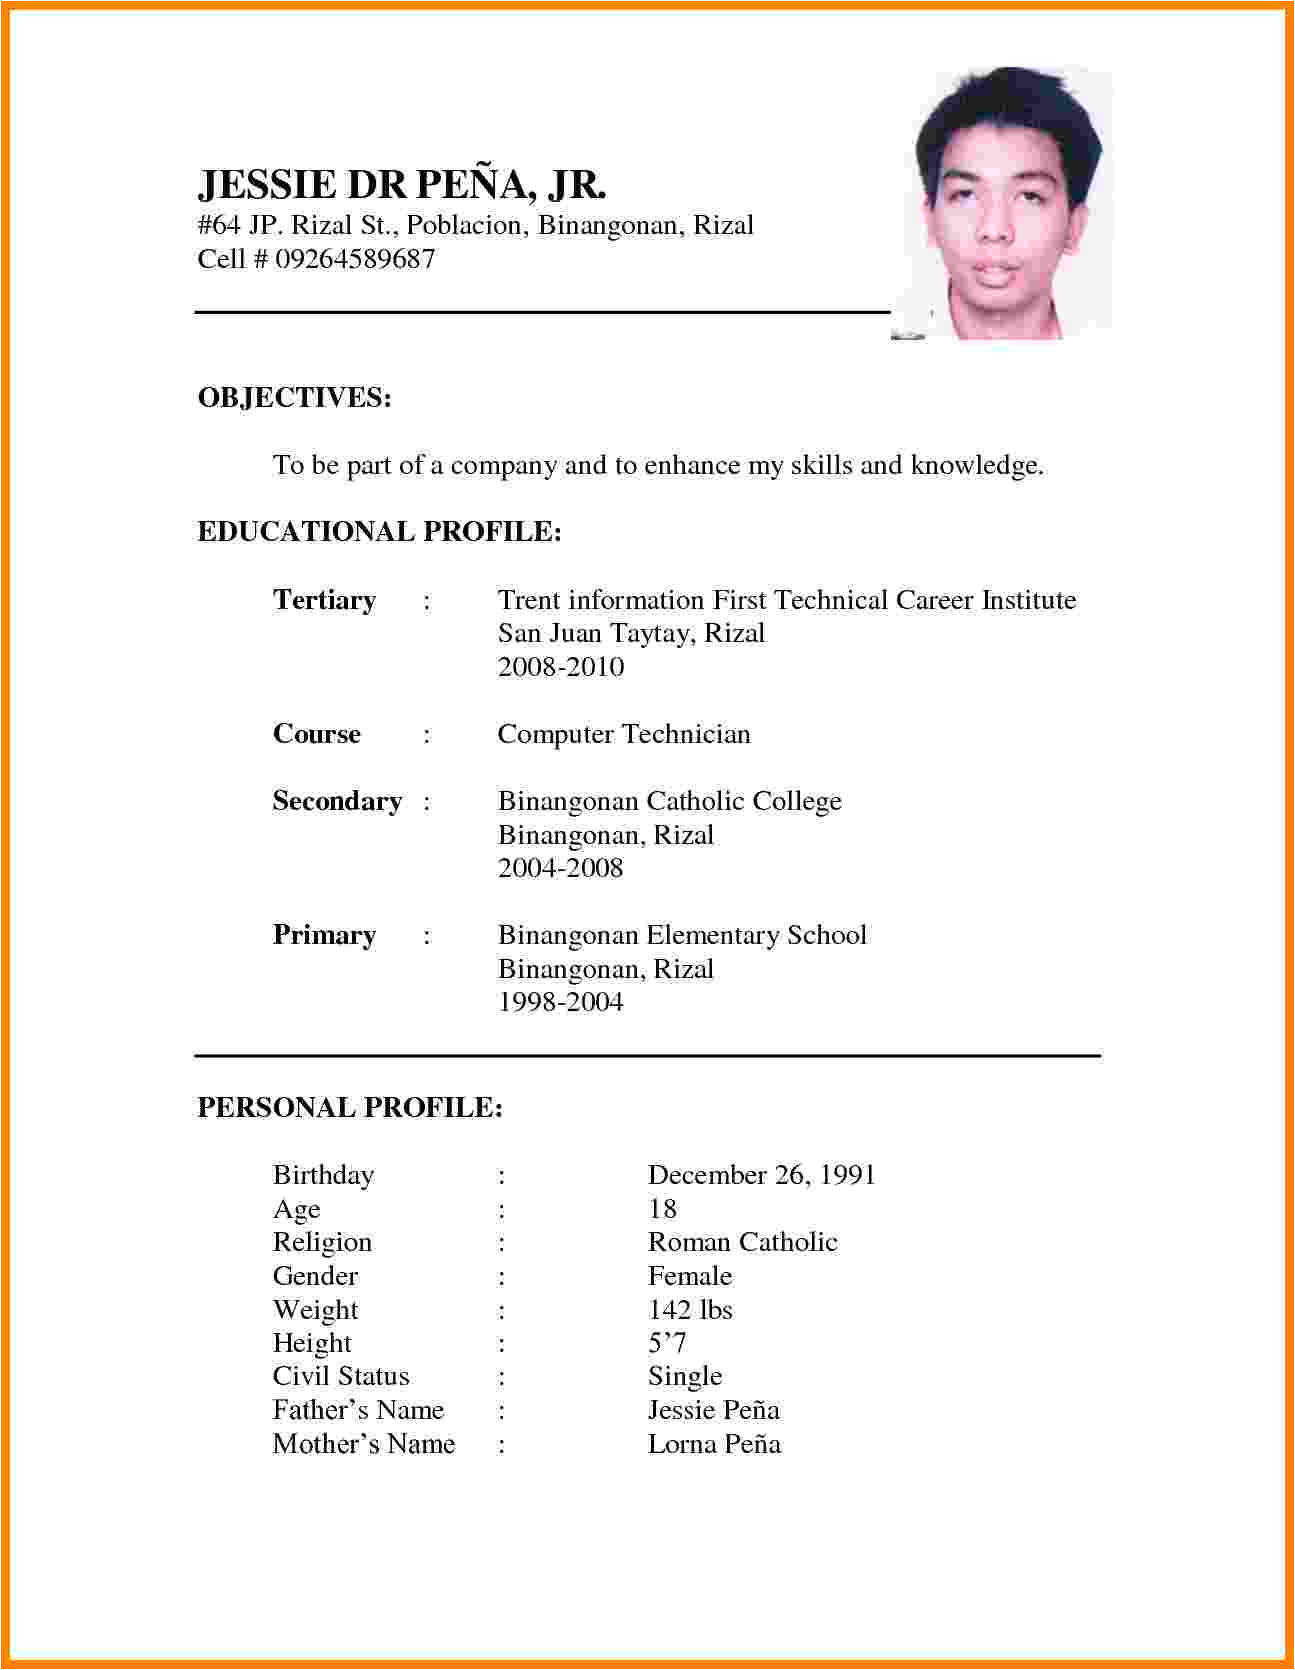 Sample Resume Letter for Job Application 11 Cv formats Samples for Job theorynpractice